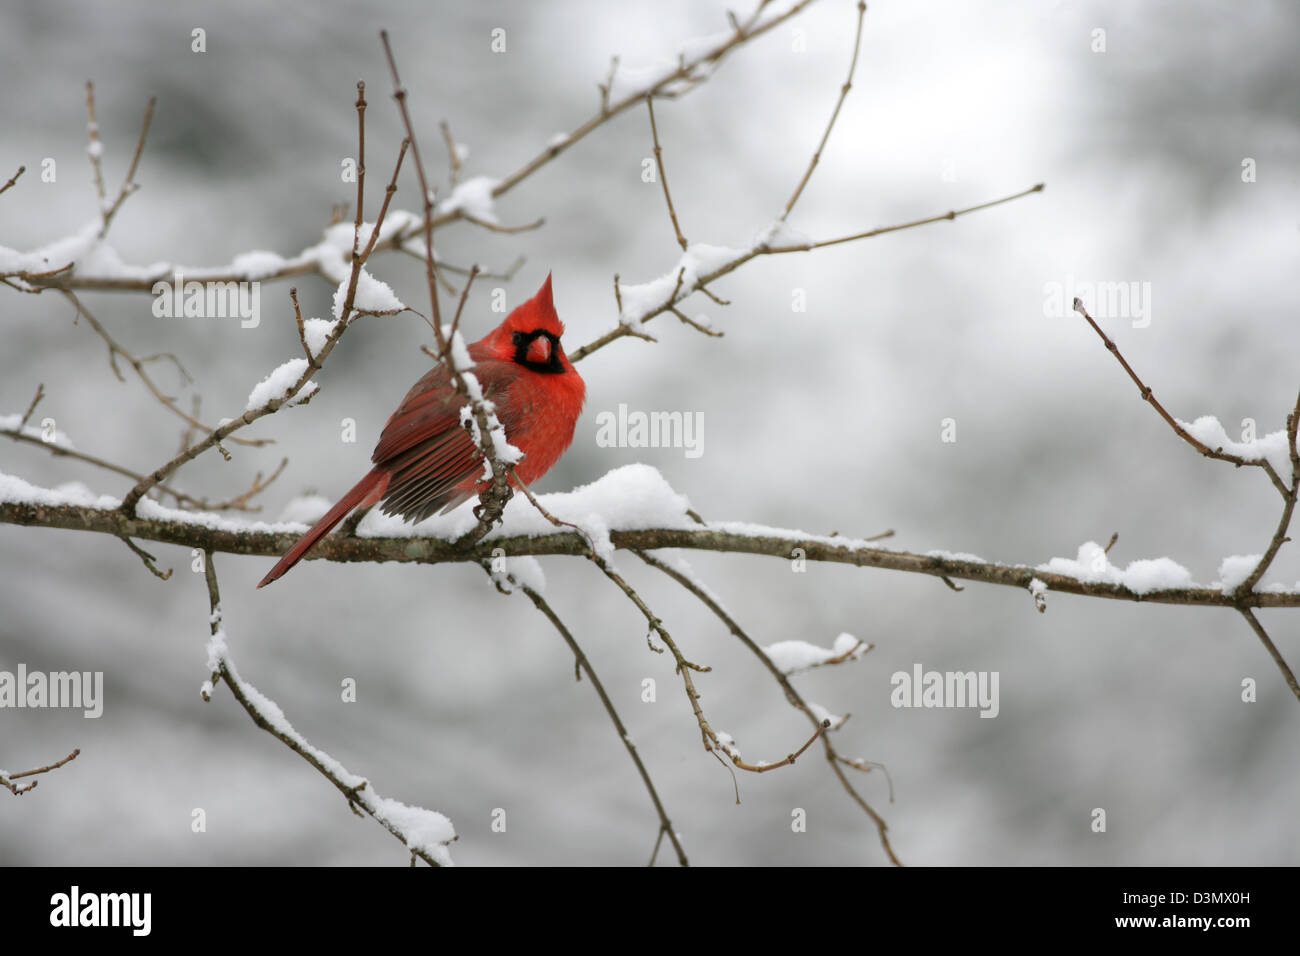 Northern Cardinal perching in Snow bird birds songbird songbirds Ornithology Science Nature Wildlife Environment Stock Photo